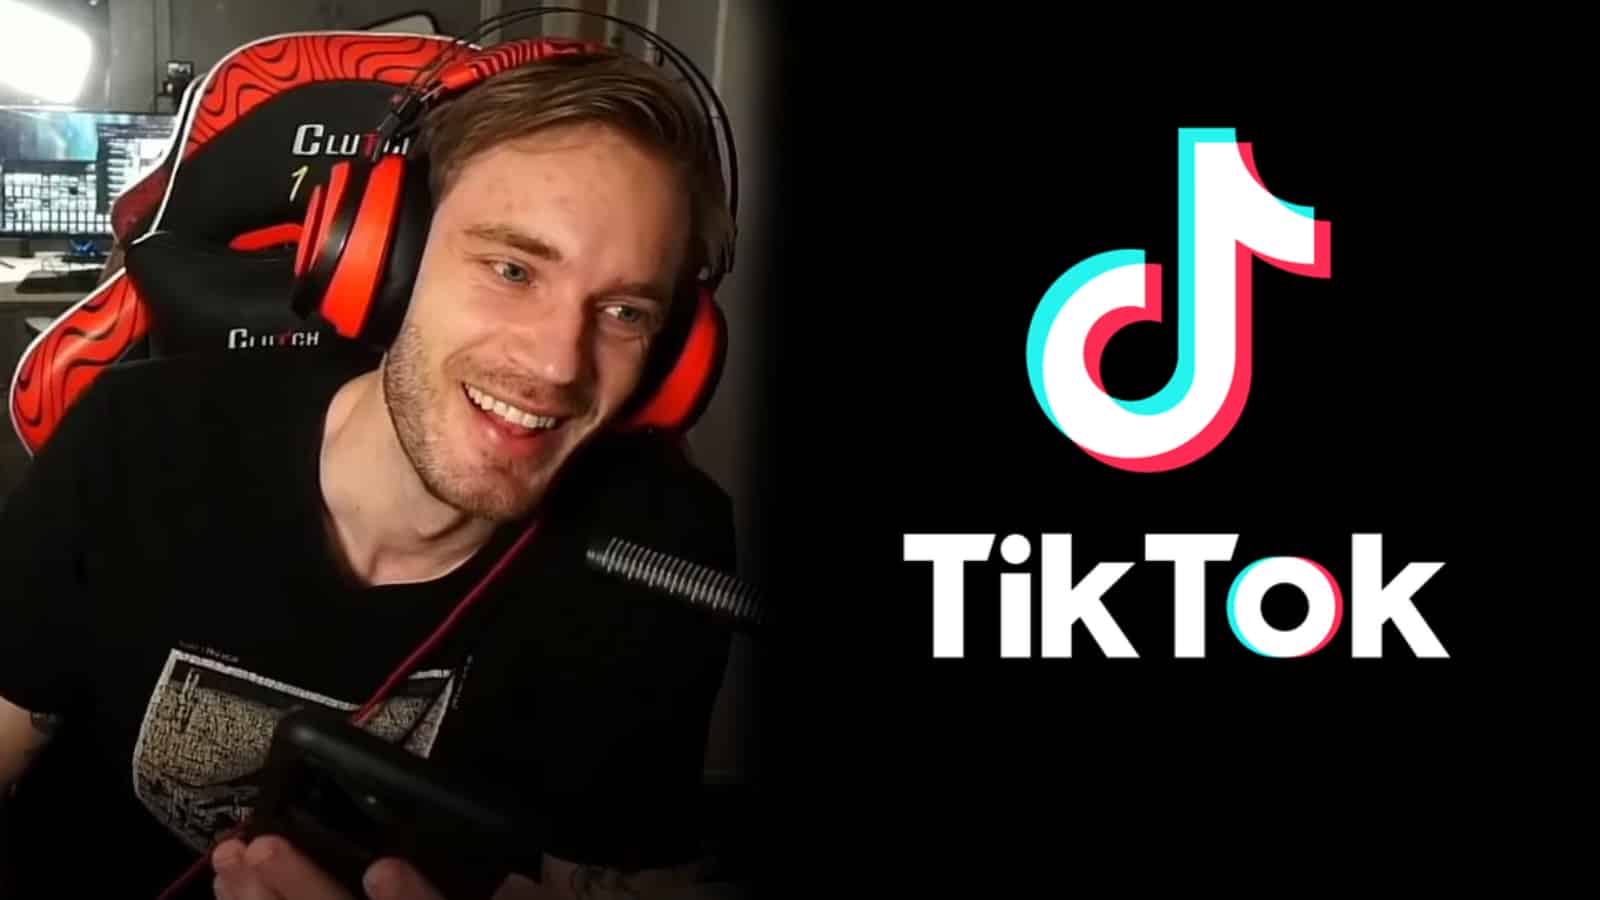 YouTuber PewDiePie laughing next to TikTok logo